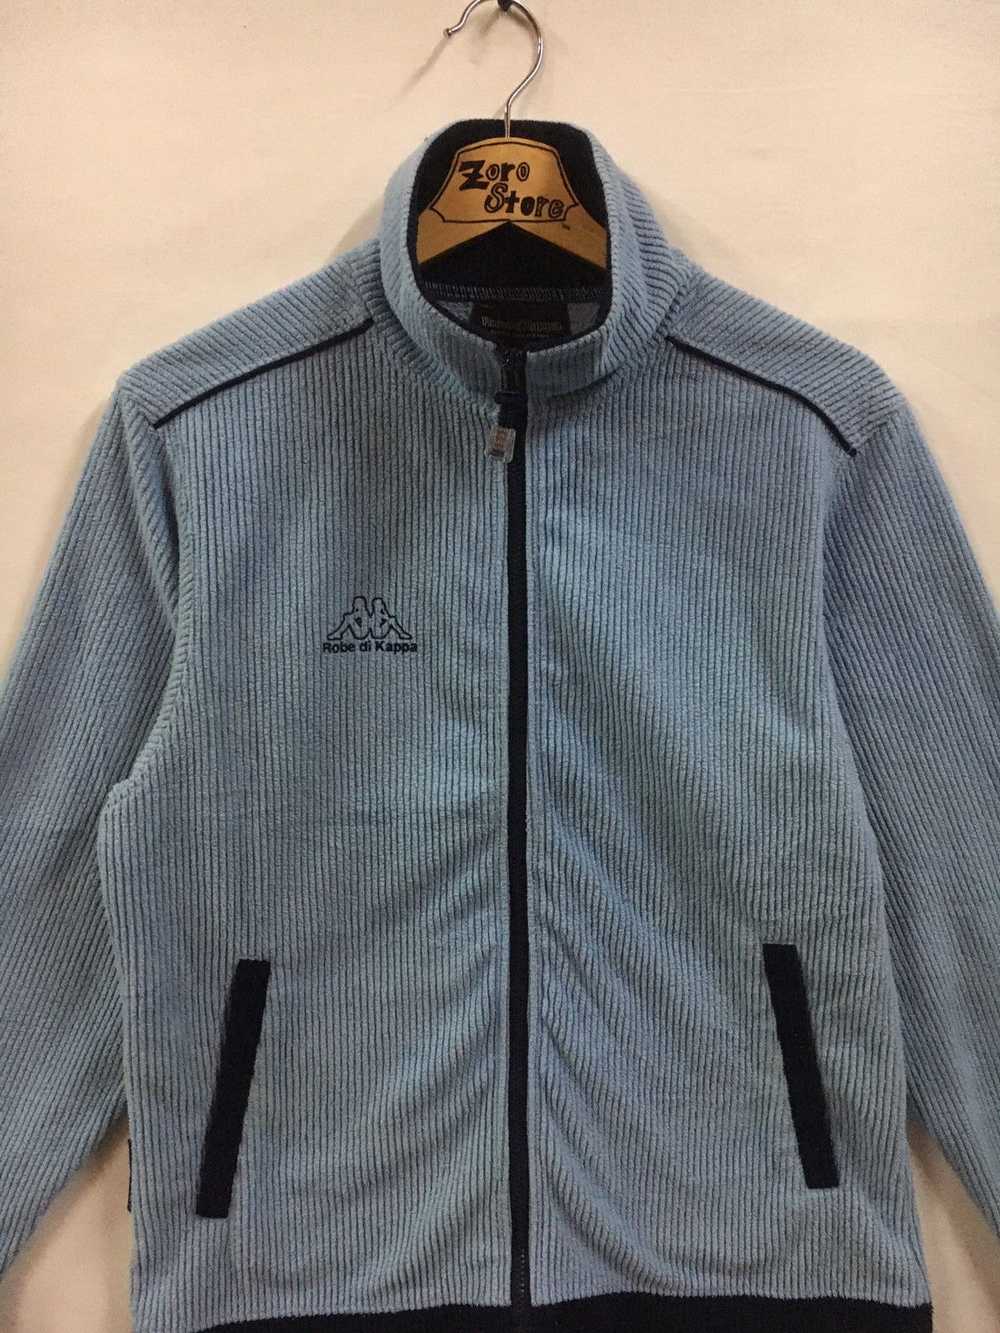 Japanese Brand × Kappa Robe di Kappa sweater - image 3